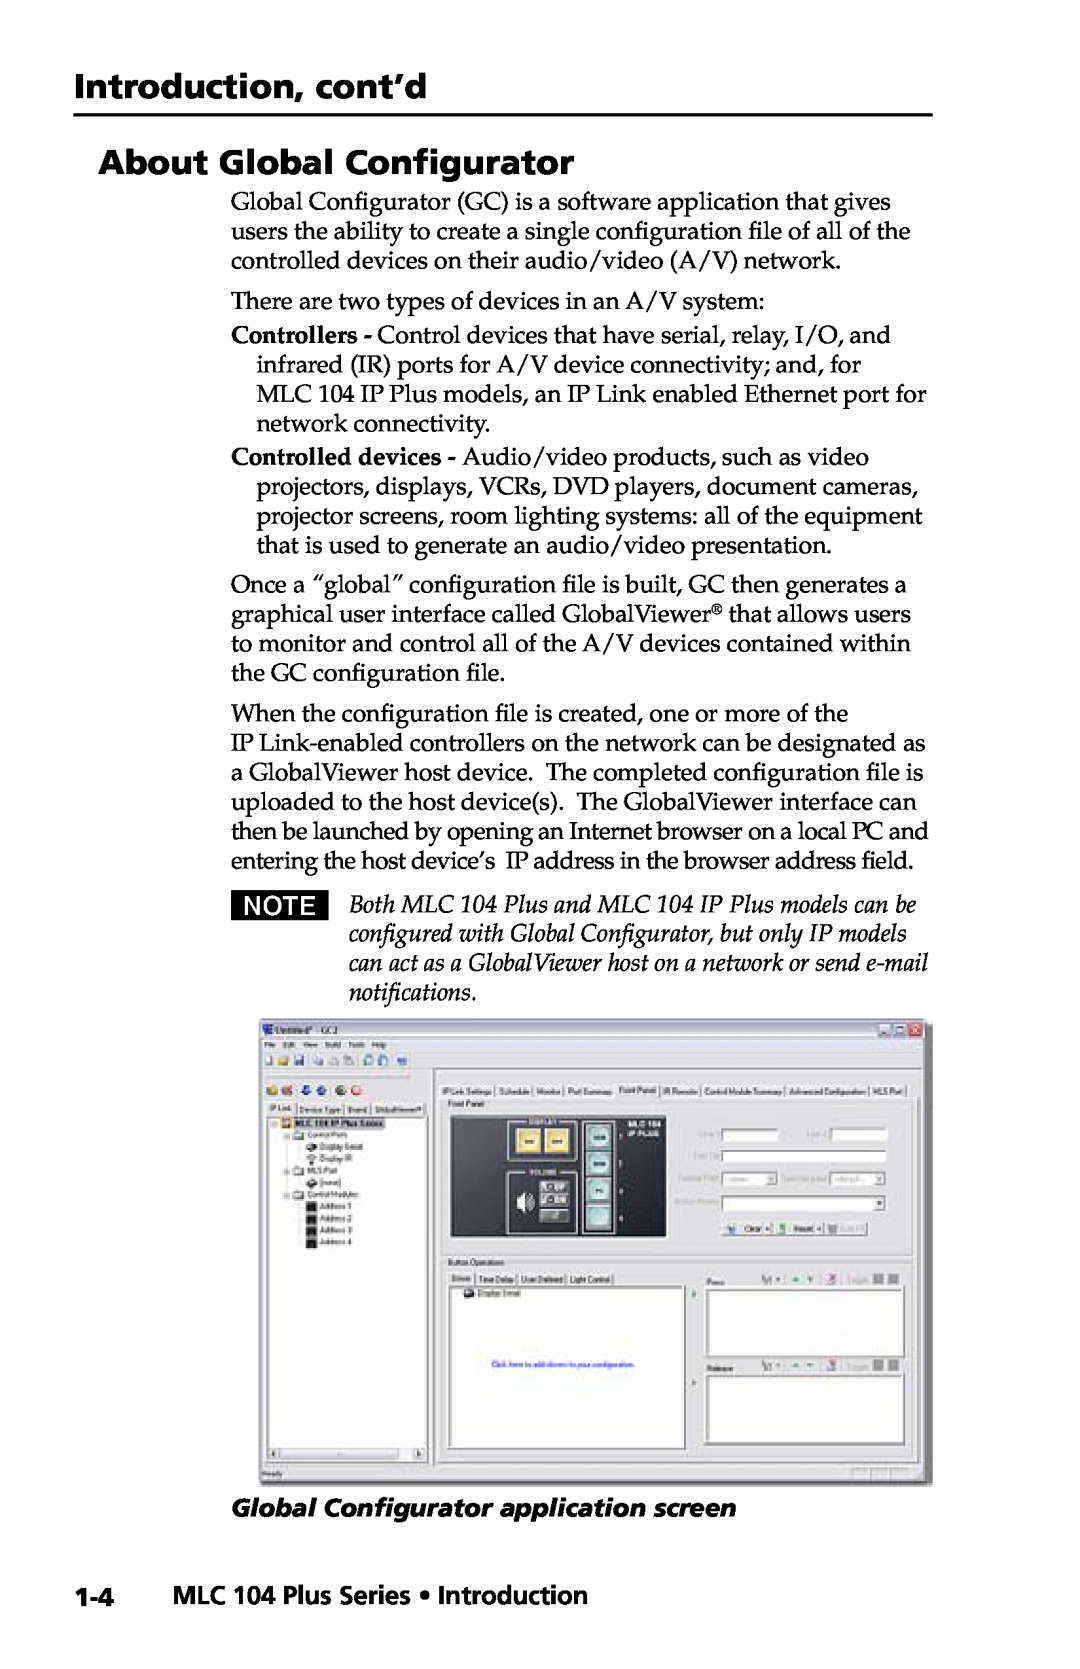 Extron electronic setup guide Introduction, cont’d About Global Configurator, MLC 104 Plus Series Introduction 